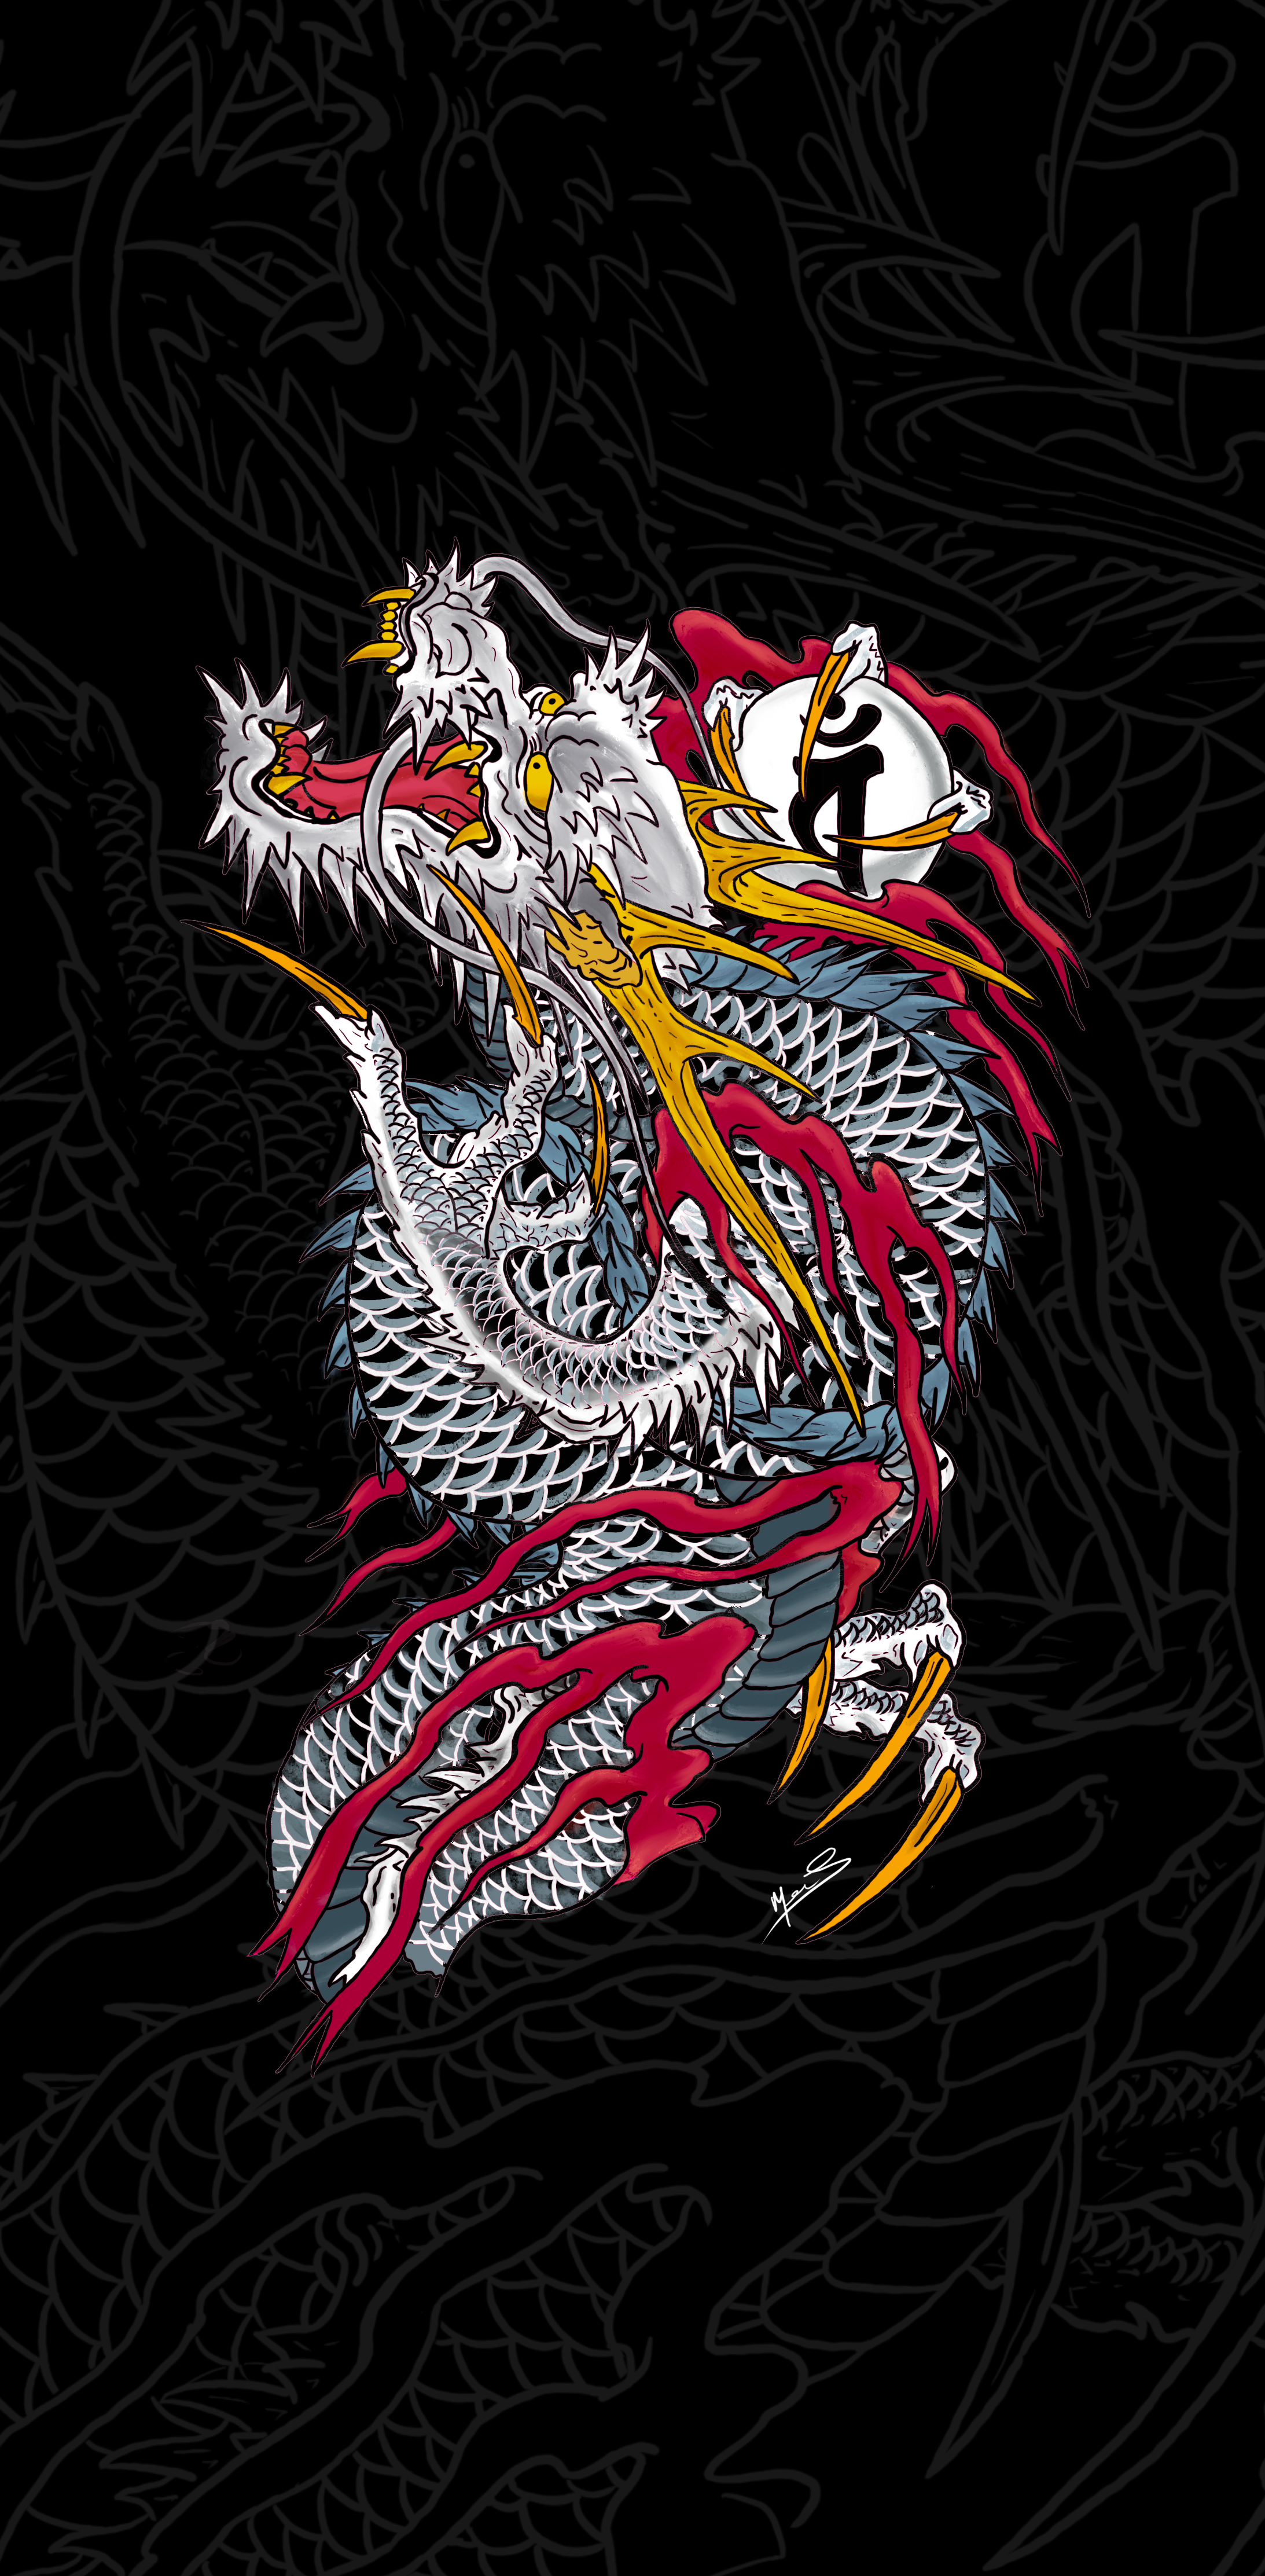 Yakuza Like A Dragon Wallpapers